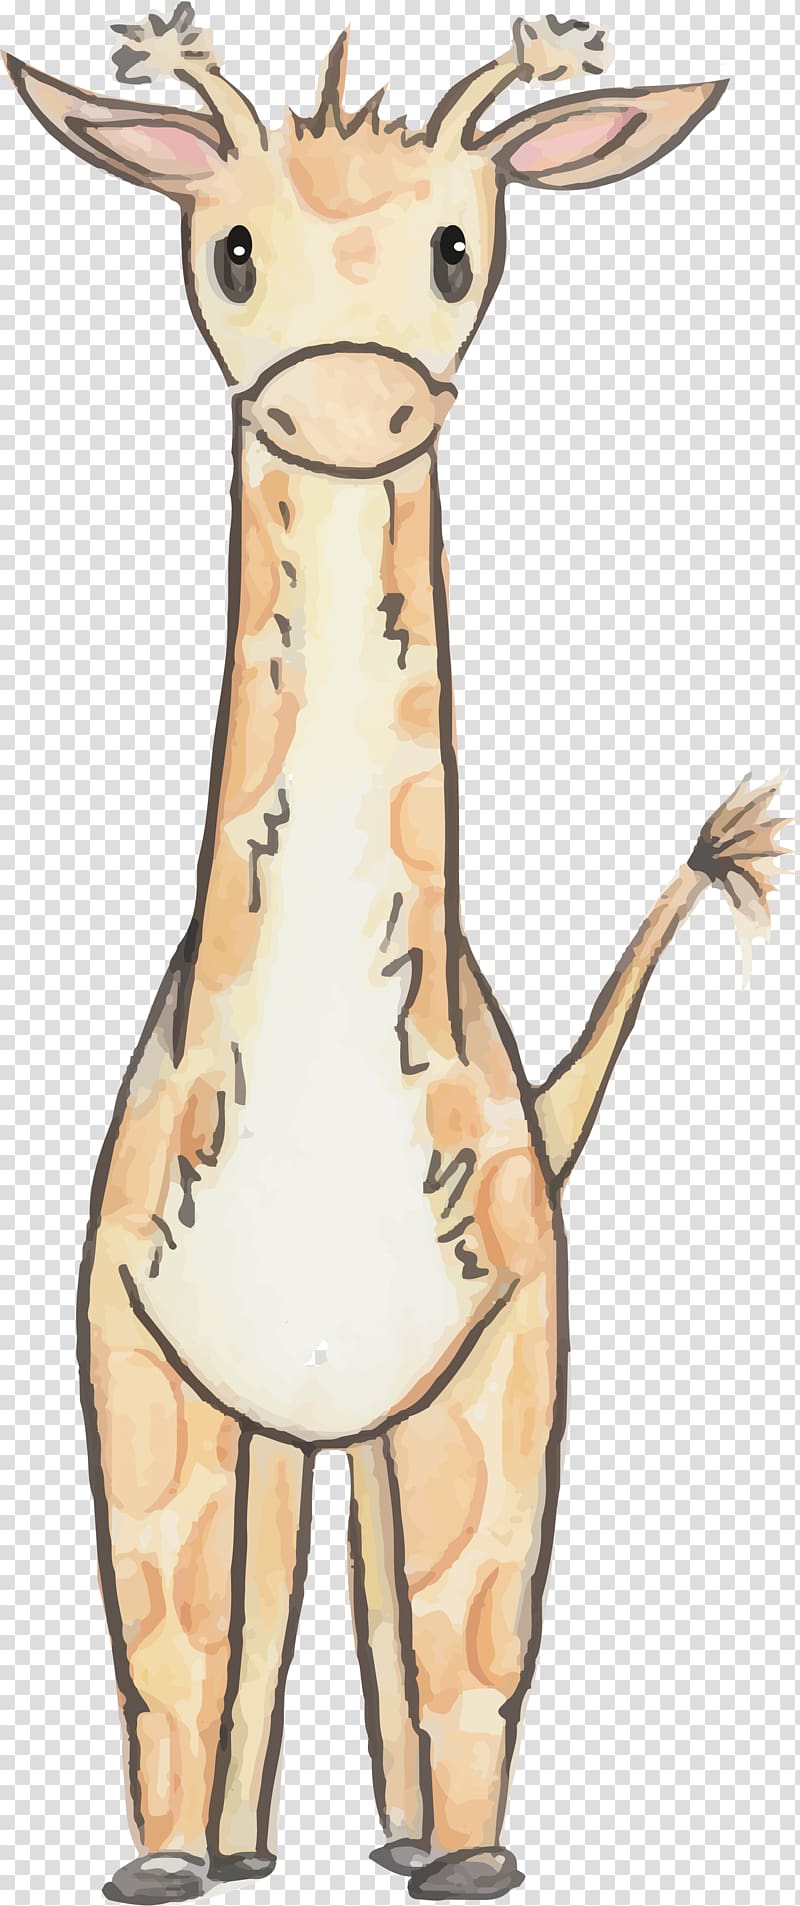 gray giraffe illustration, Watercolor giraffe transparent background PNG clipart